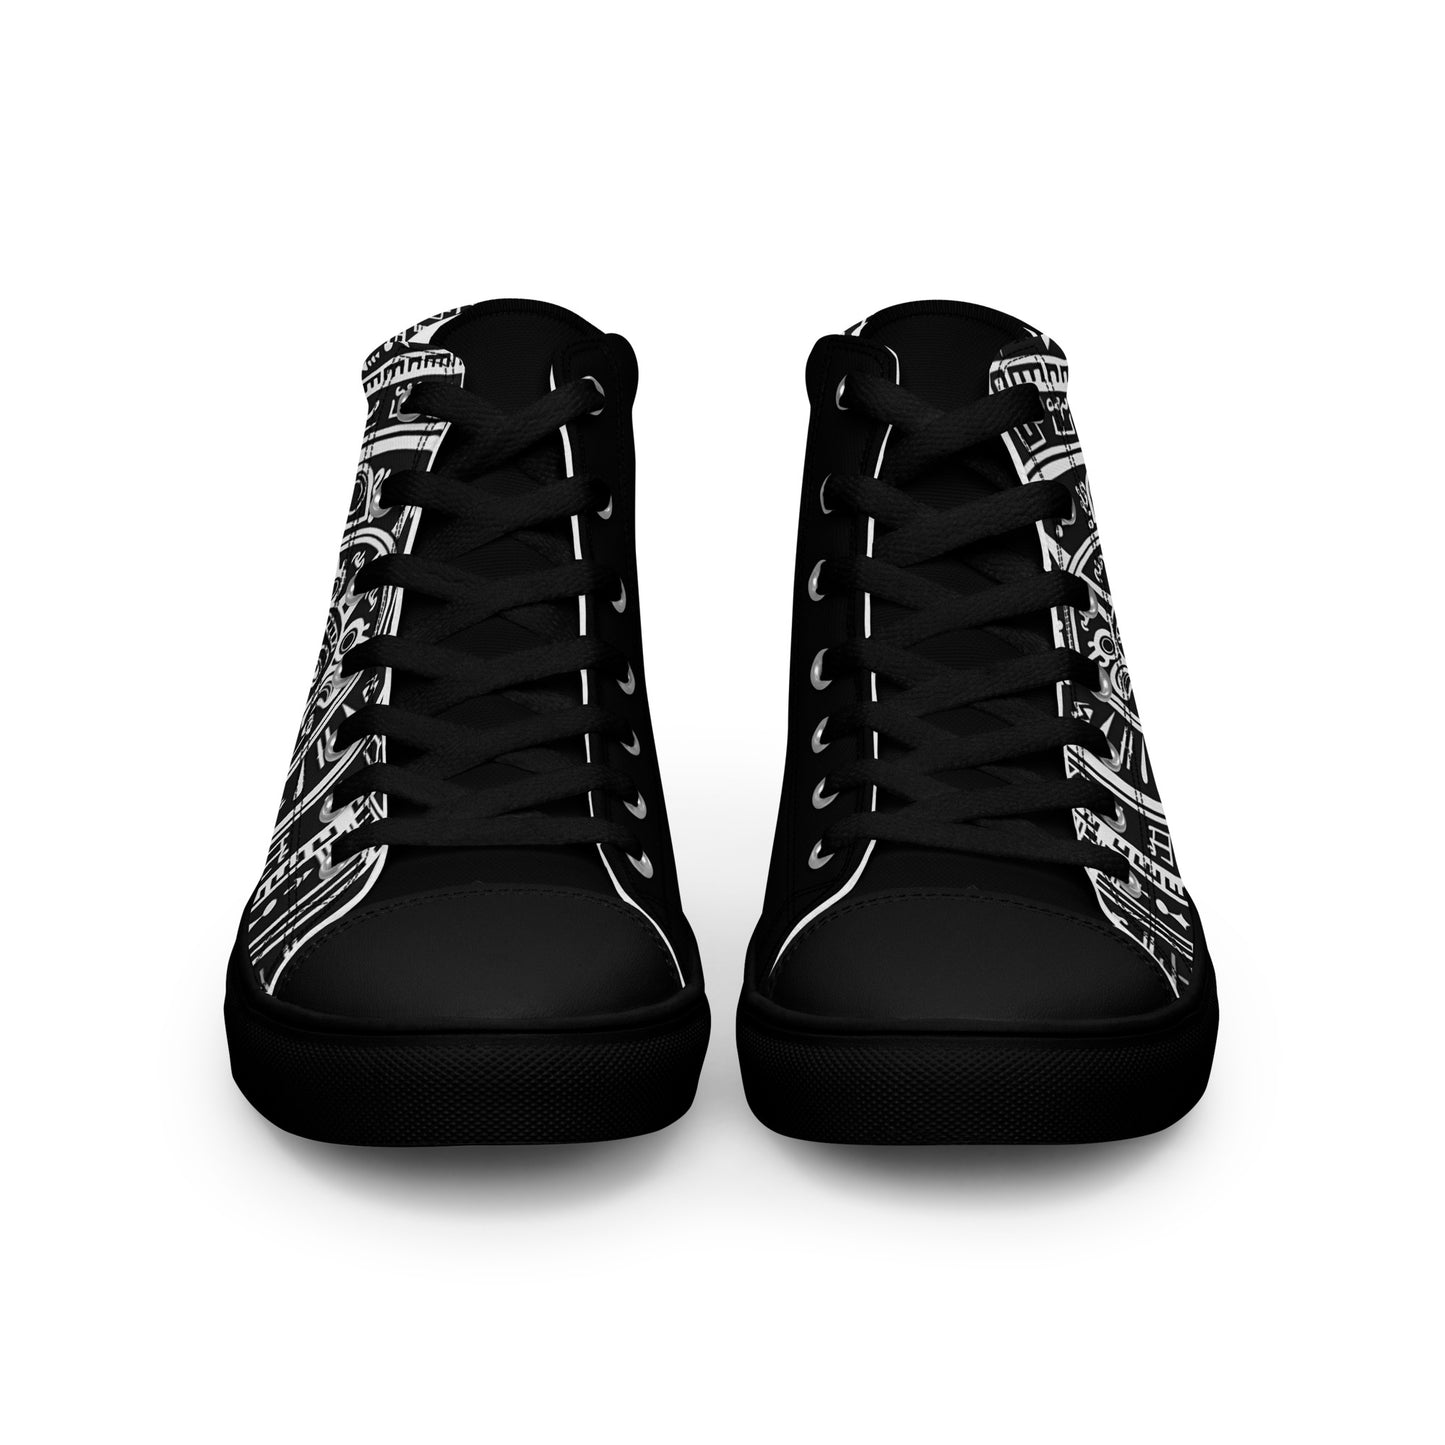 Calendario Múuyal - Women - Black - High top shoes